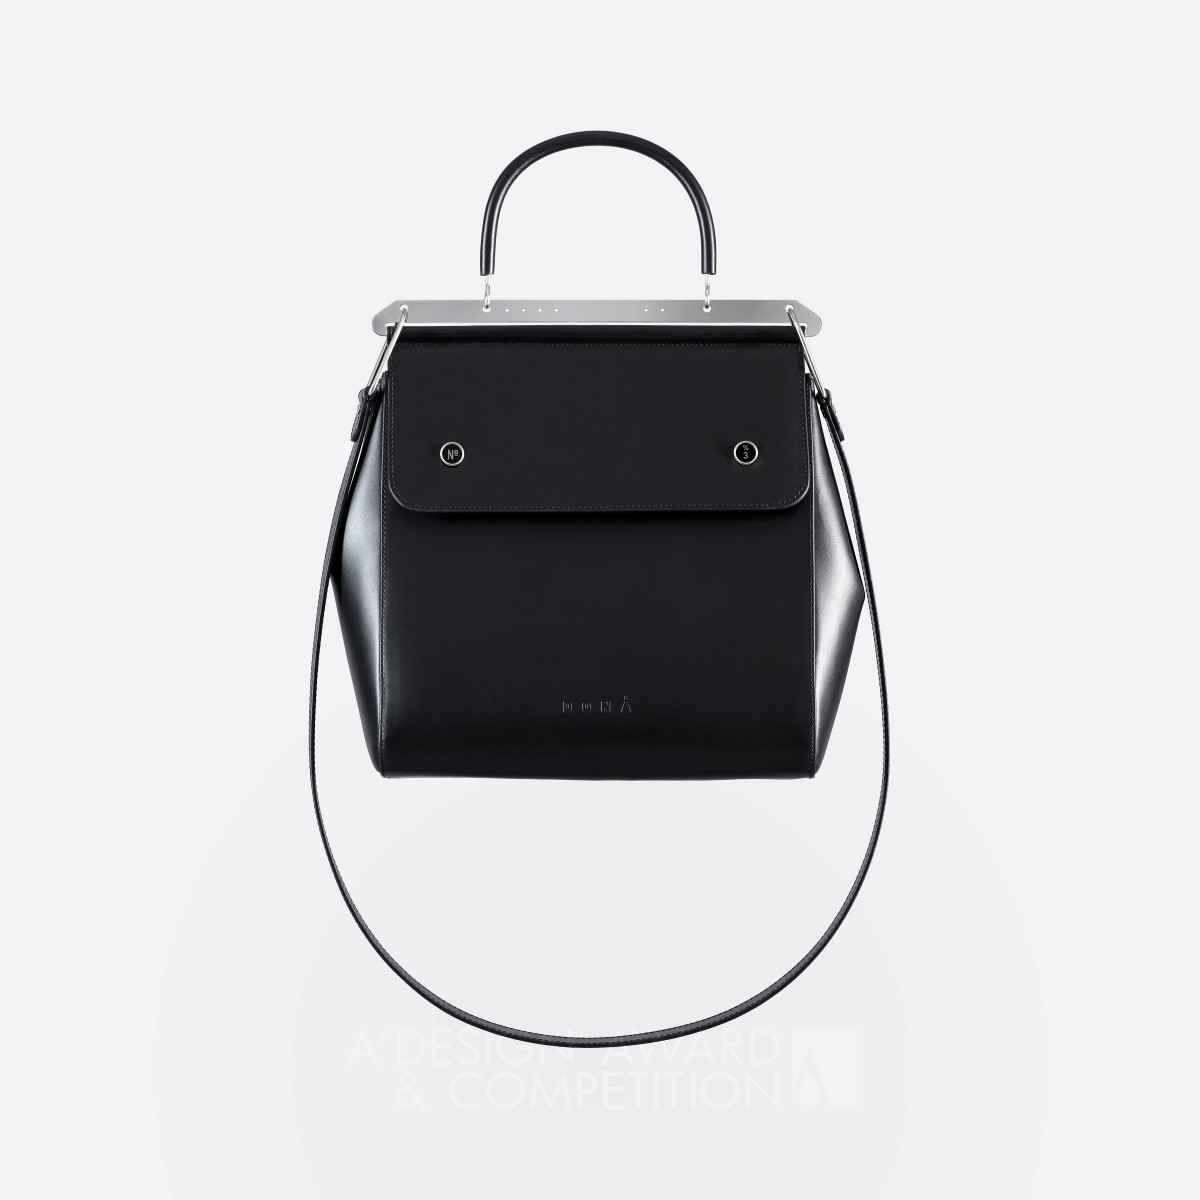 Qwerty Elemental Handbags by Patrizia Donà Platinum Fashion and Travel Accessories Design Award Winner 2020 